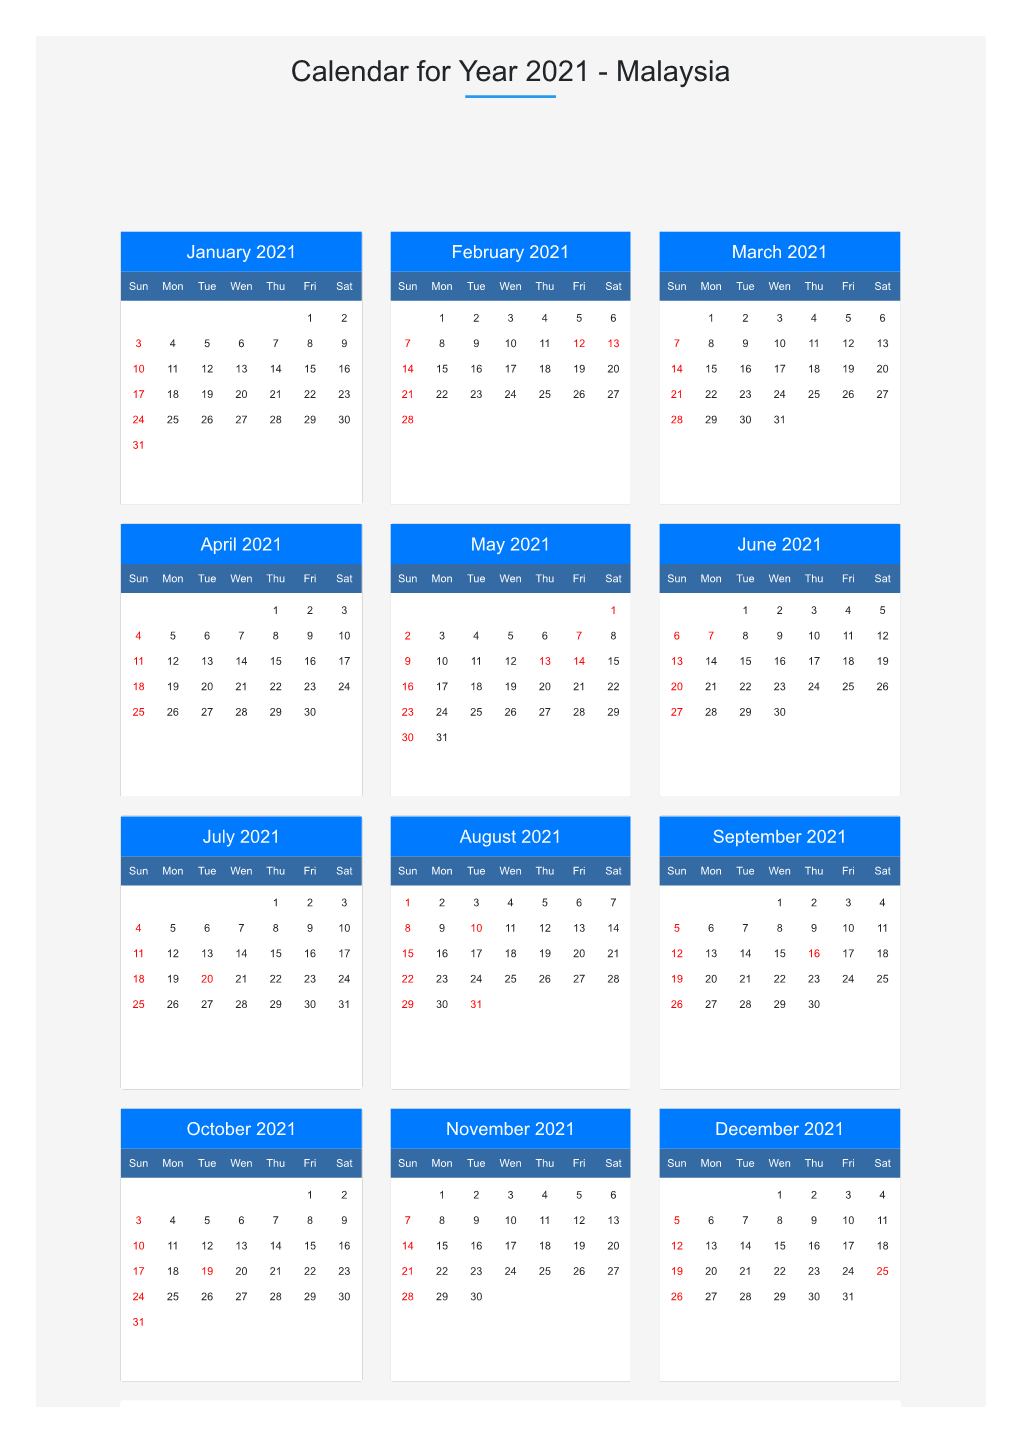 Calendar for Year 2021 - Malaysia